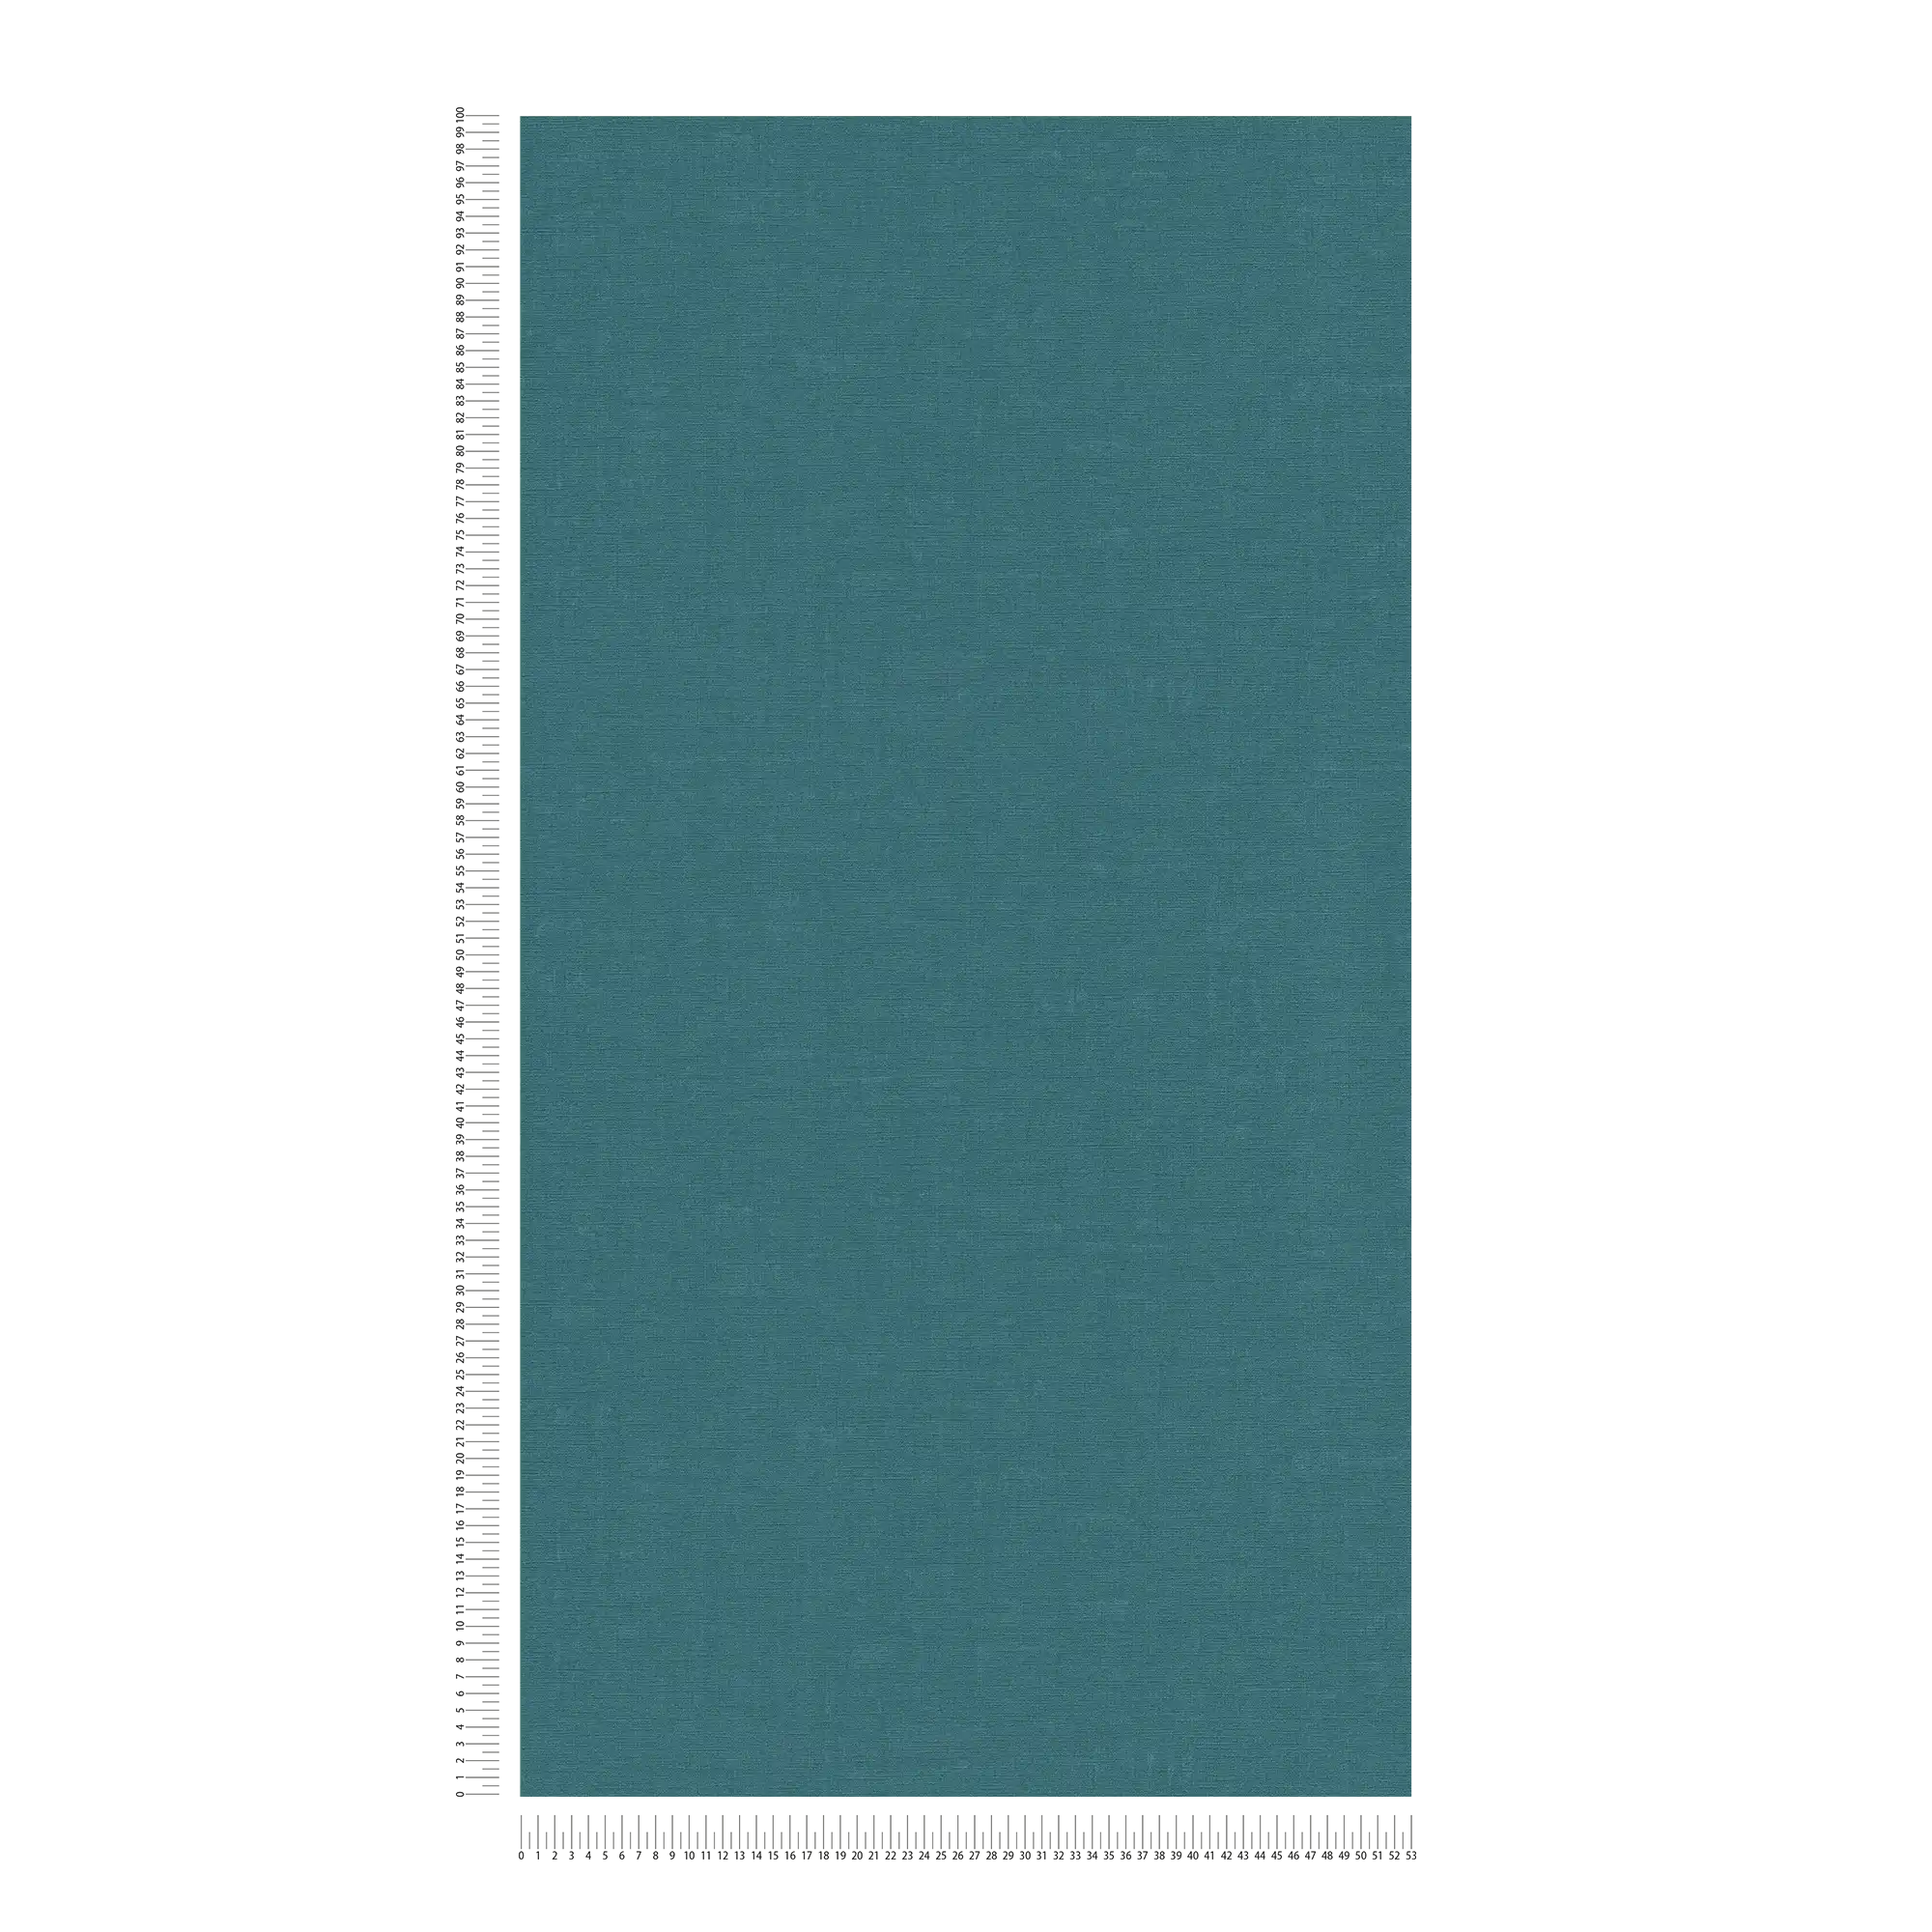             Papel pintado no tejido liso con efecto moteado - azul, verde
        